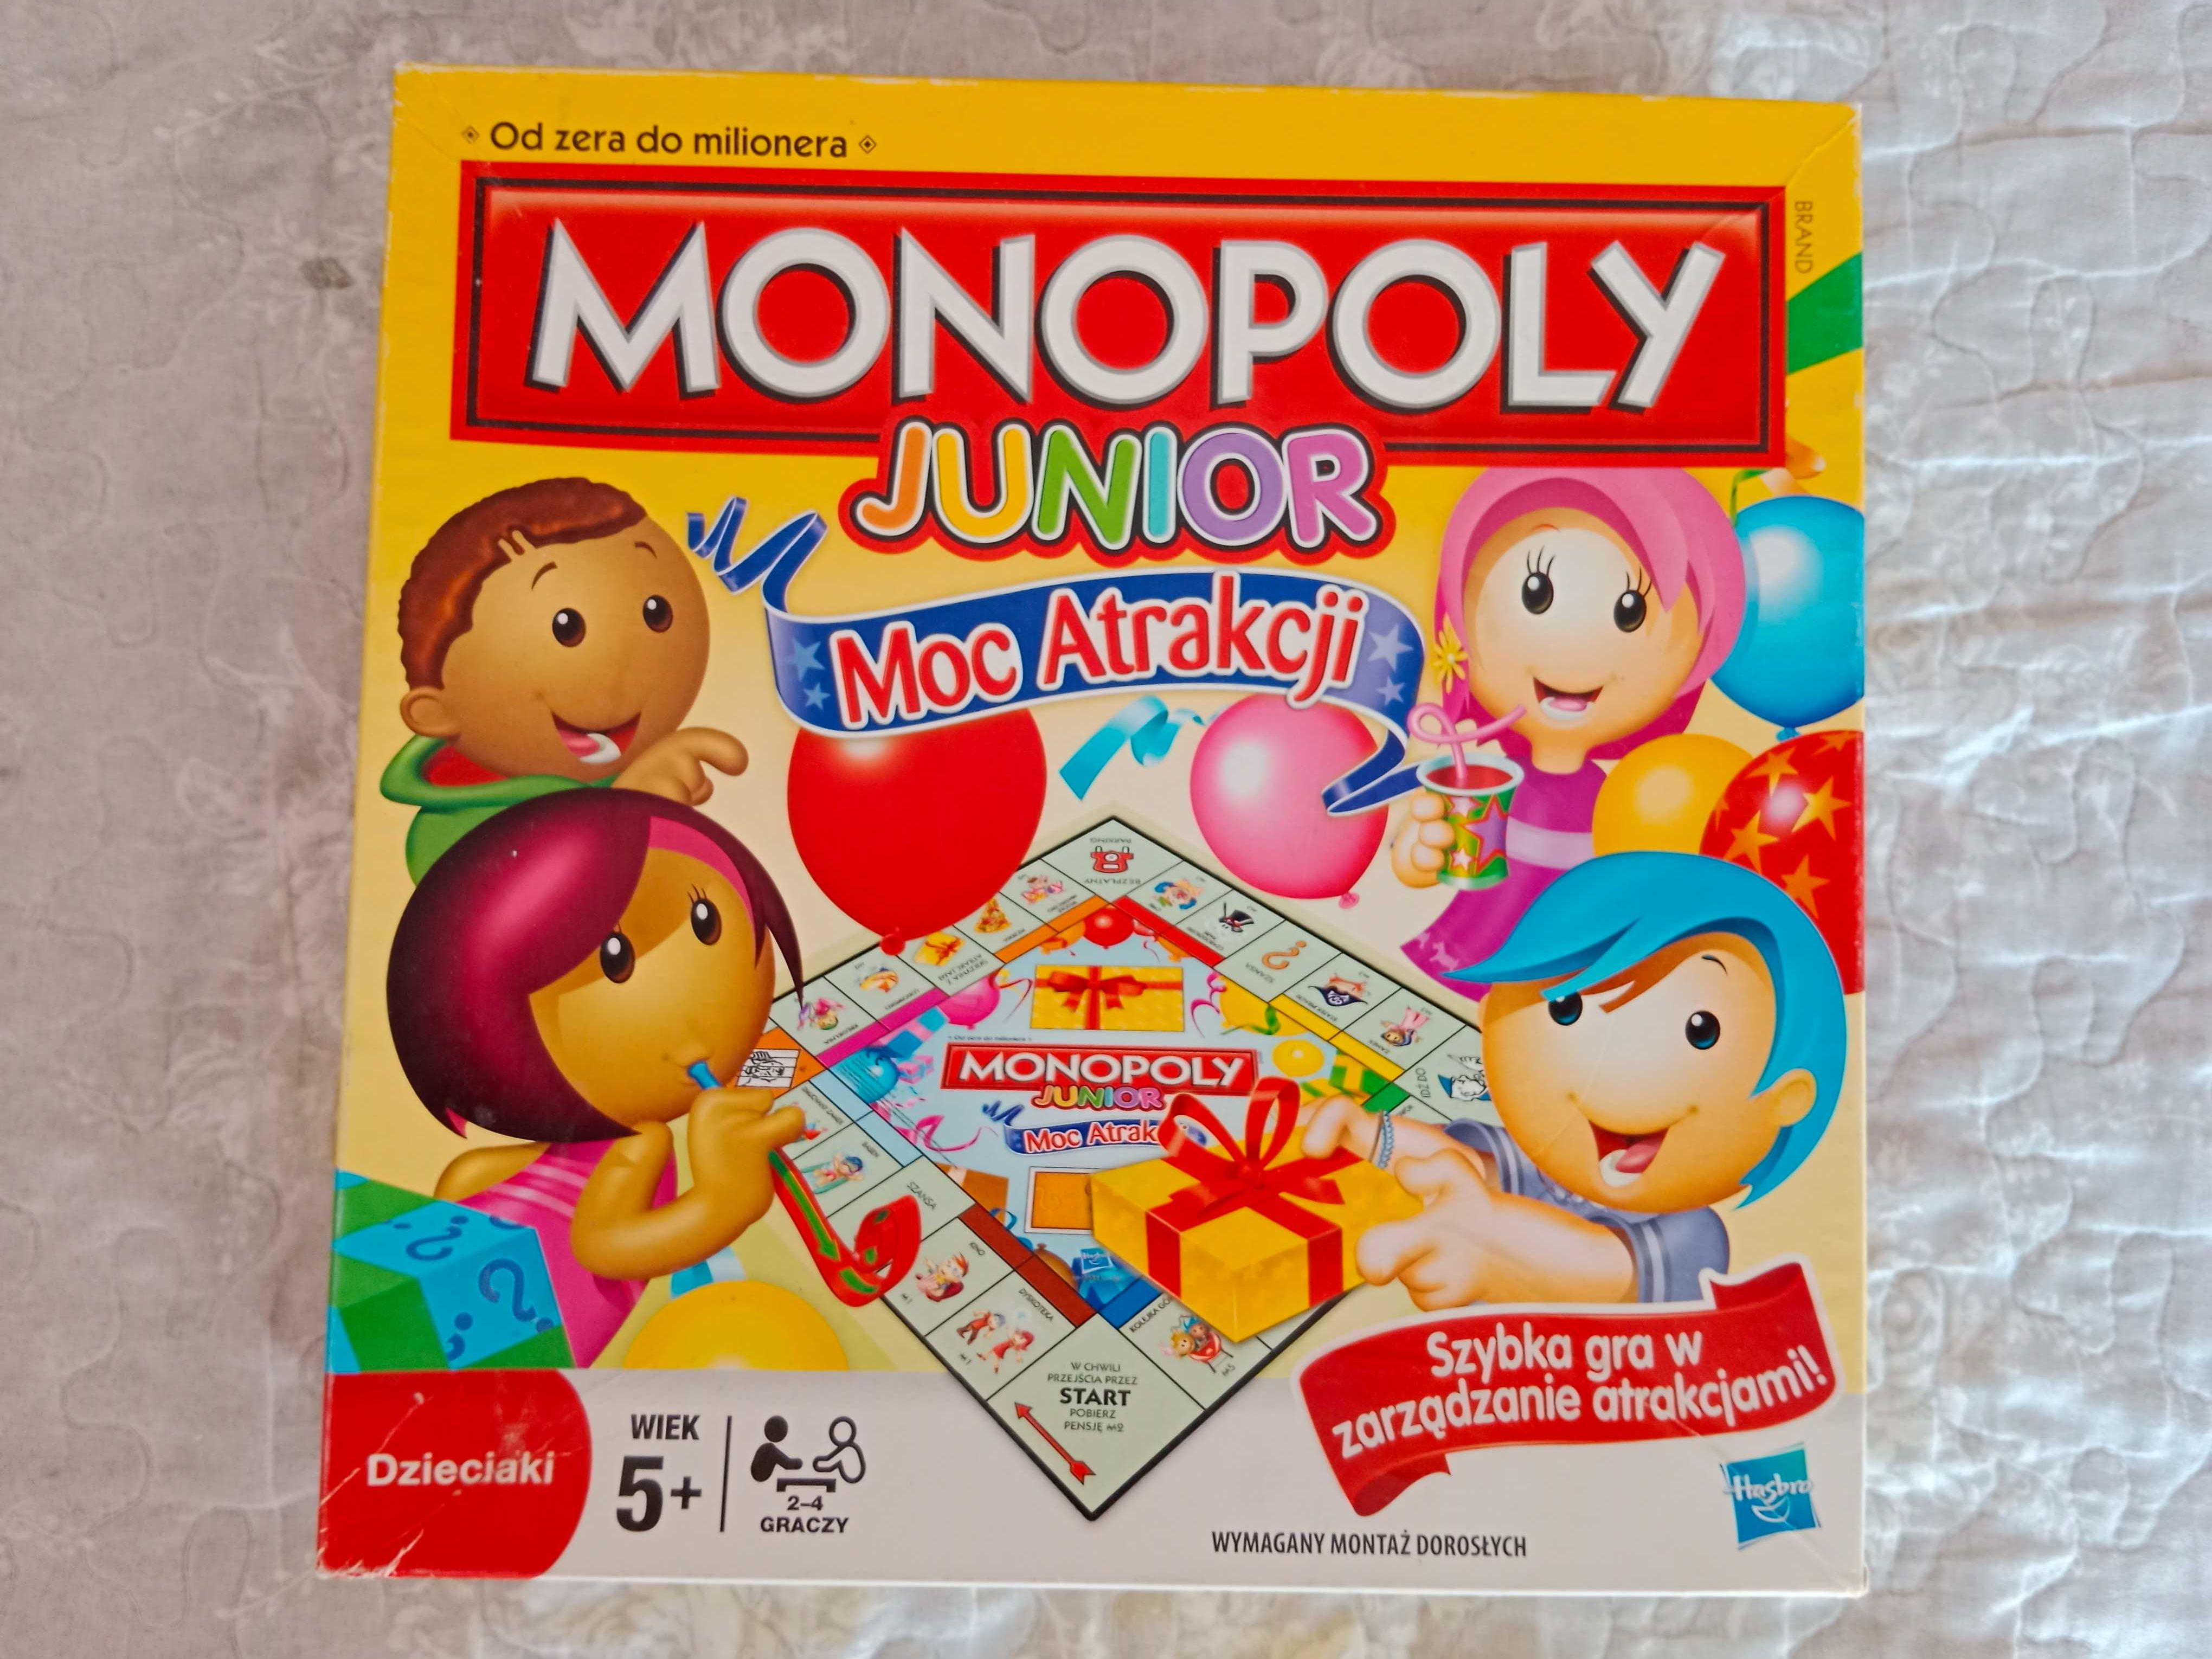 Monopoly junior gra wiek 5+